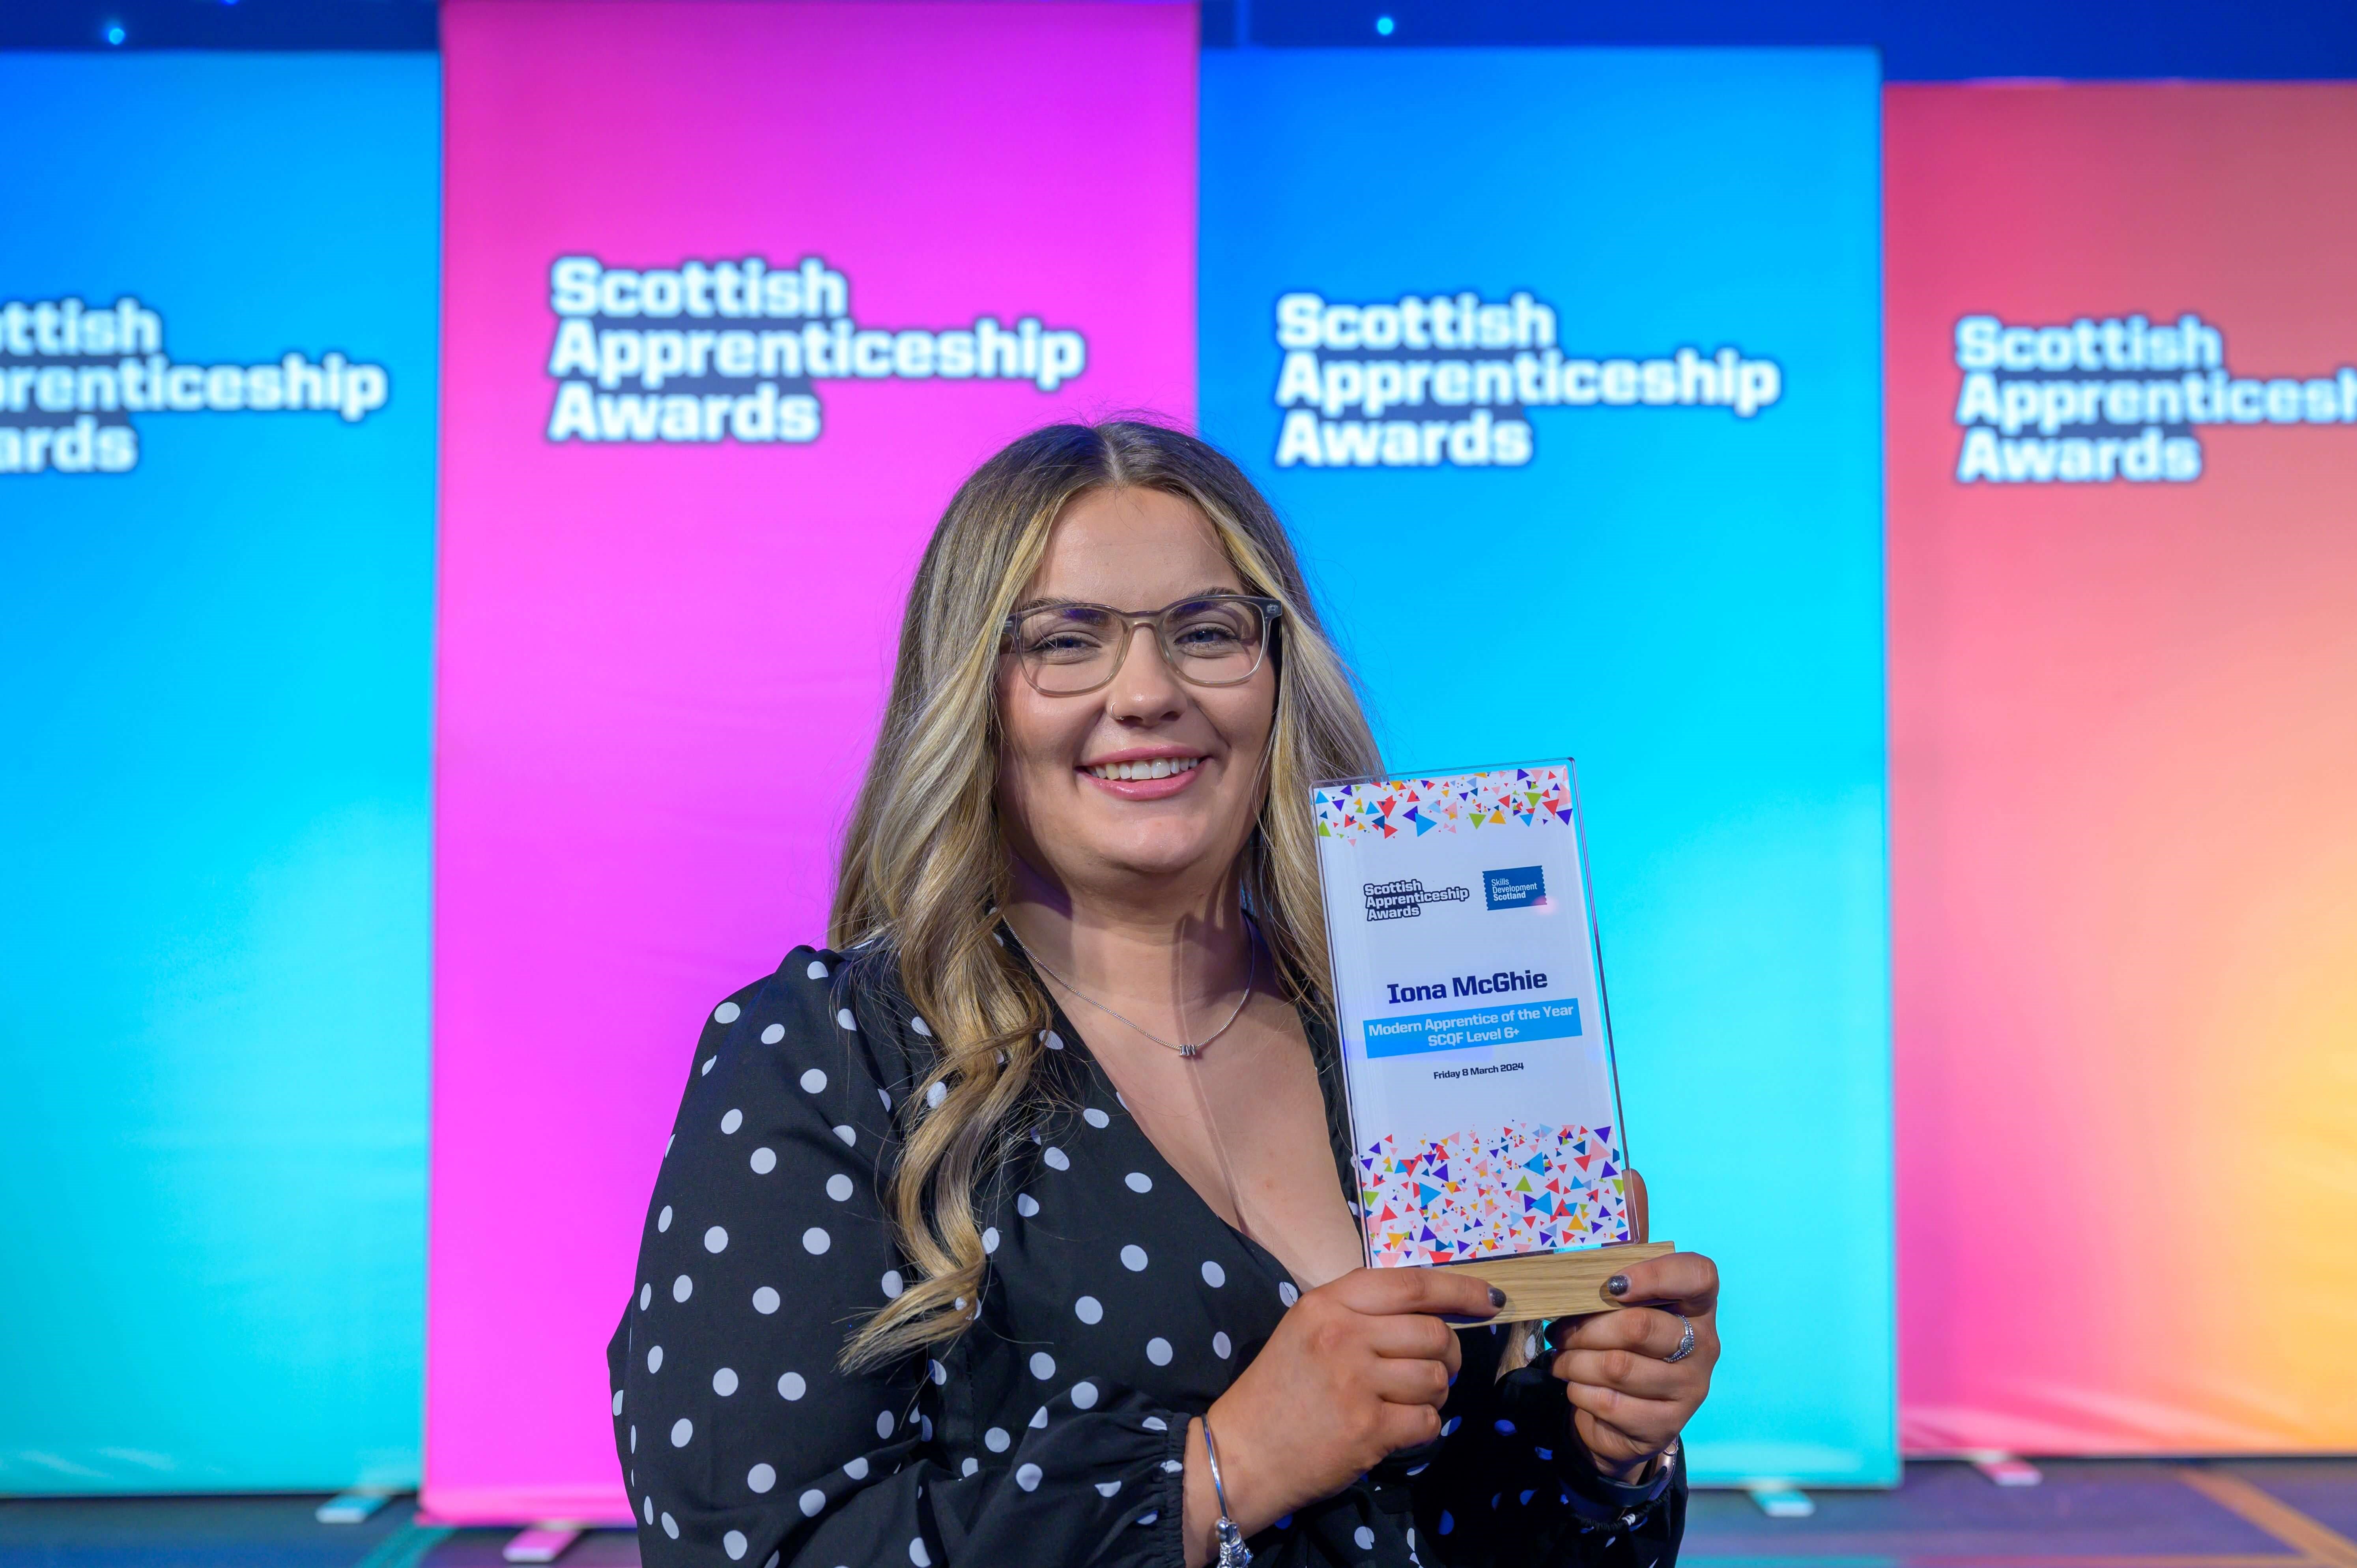 Fife College toasts success of apprentice Iona McGhie after Scottish Apprenticeship Award win